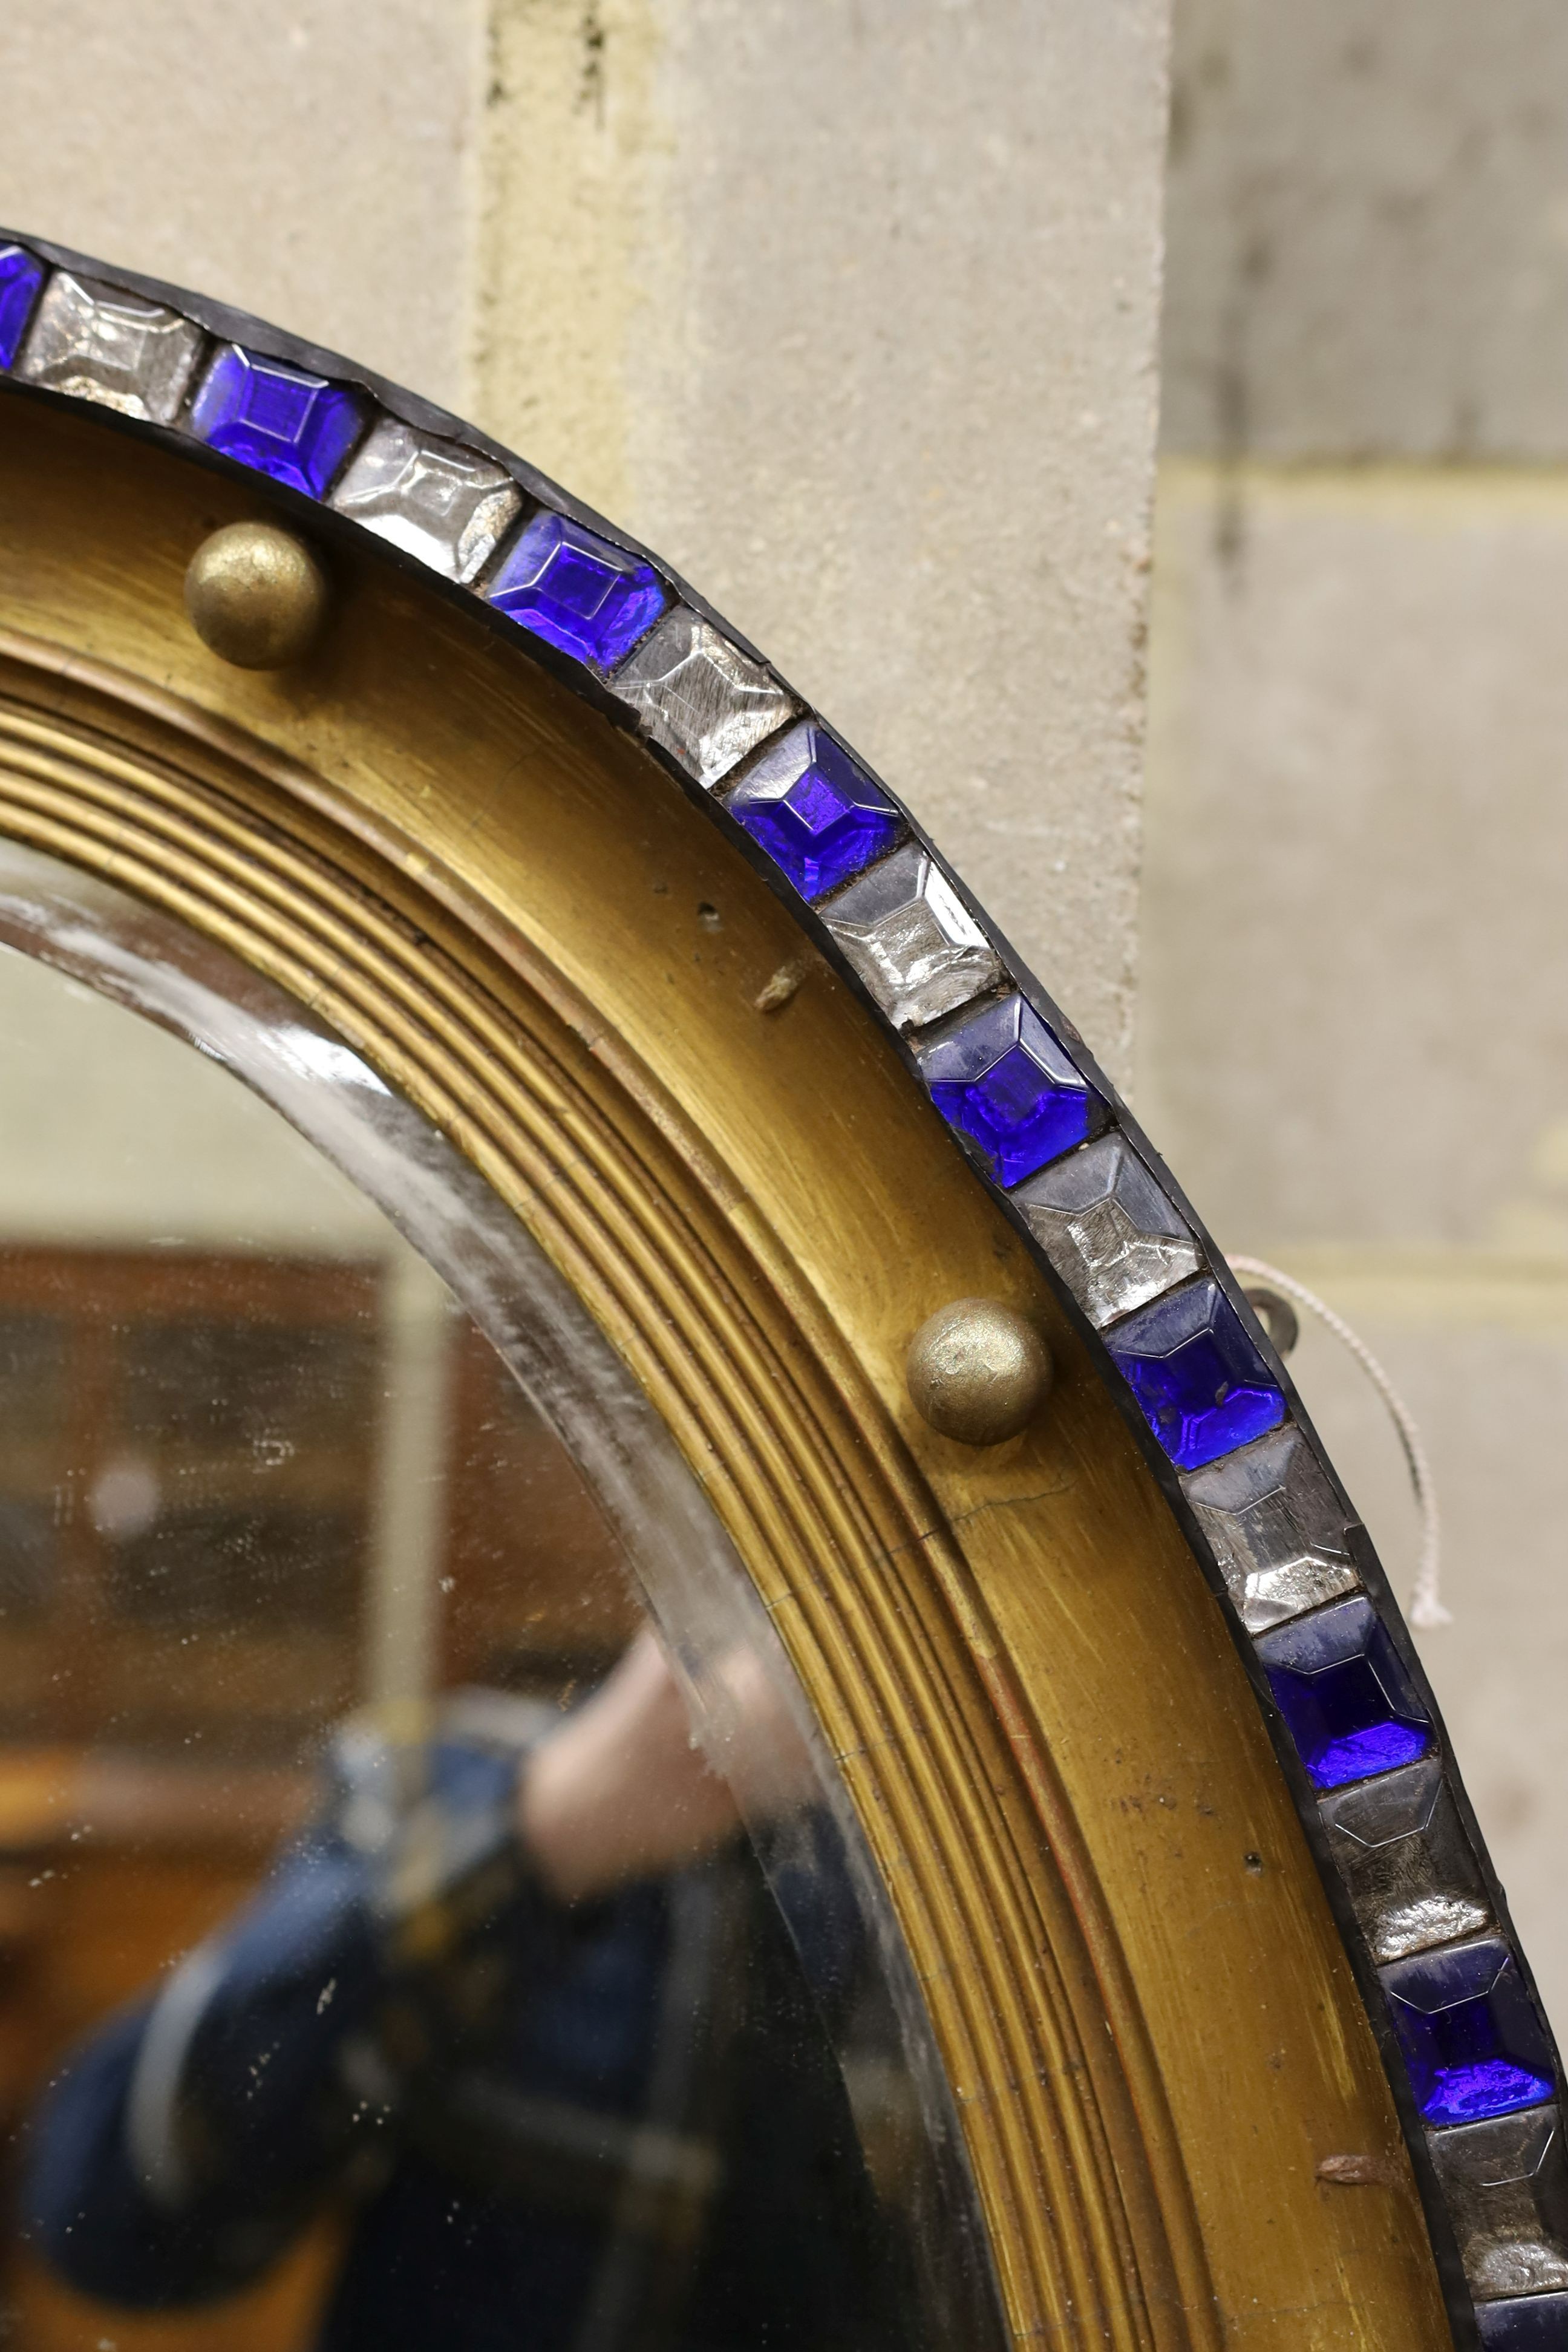 An Irish style oval wall mirror, width 64cm, height 100cm